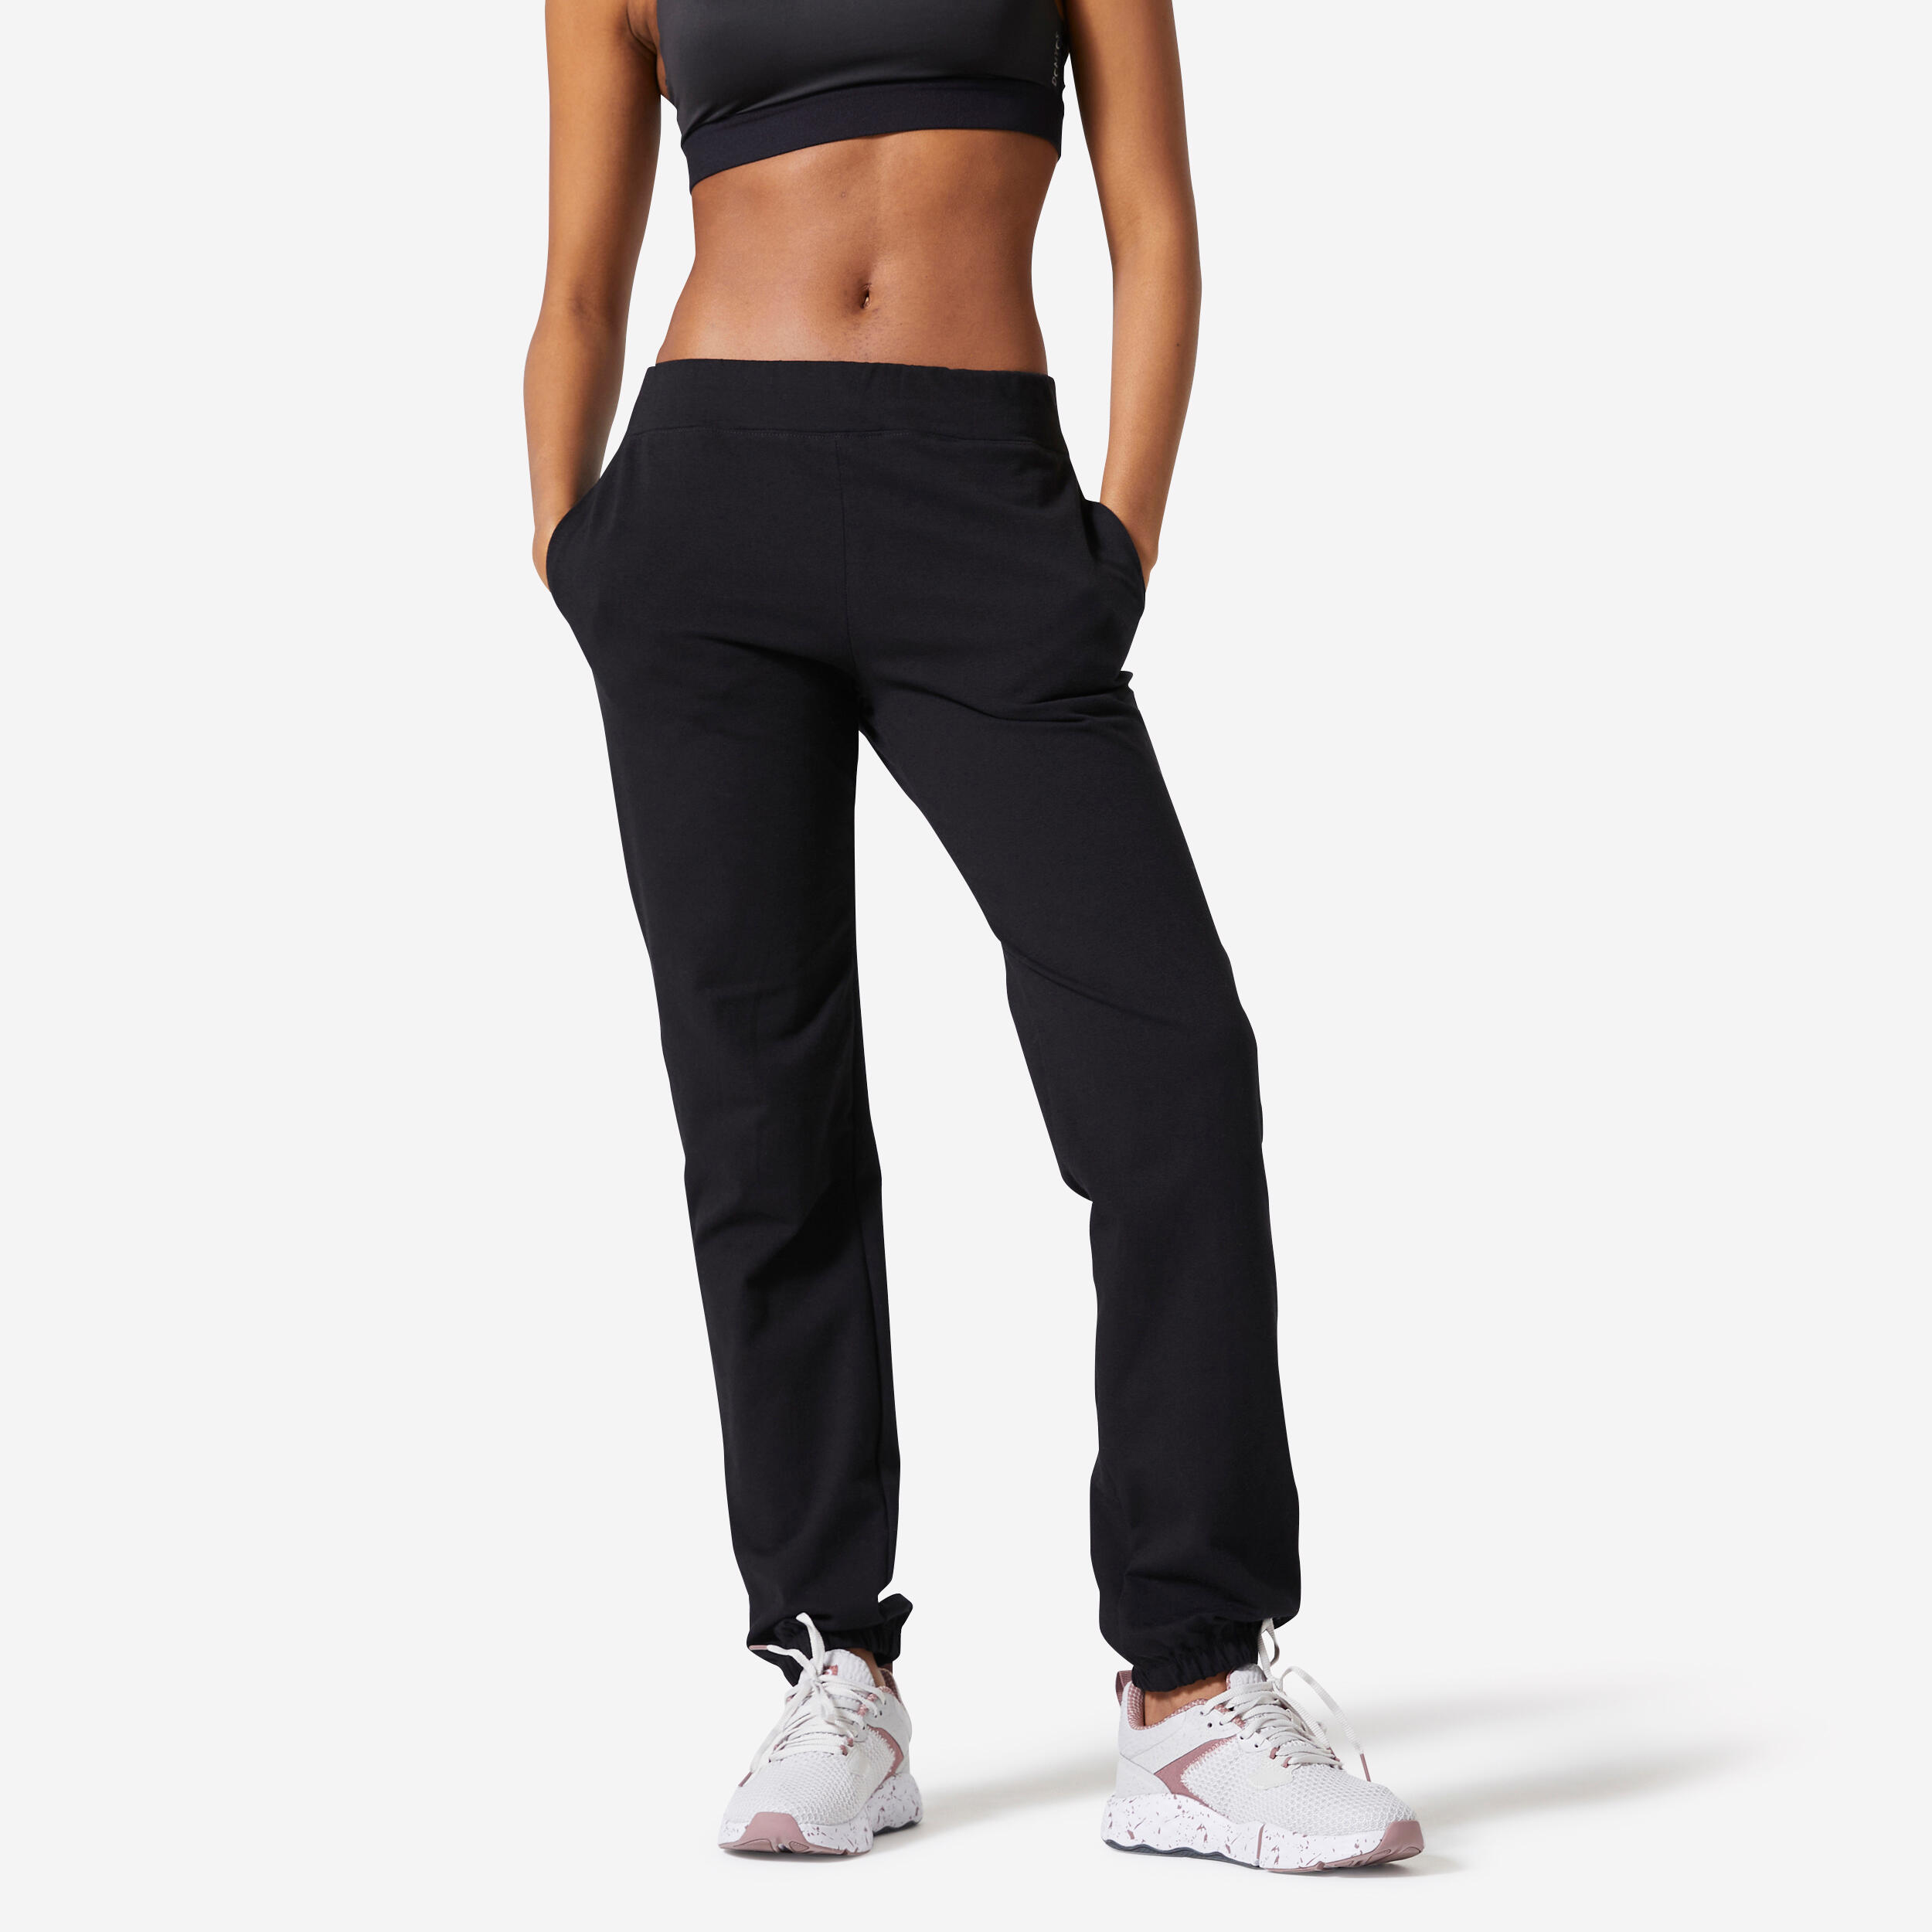 Pantalon de jogging respirant femmes - Run Dry noir